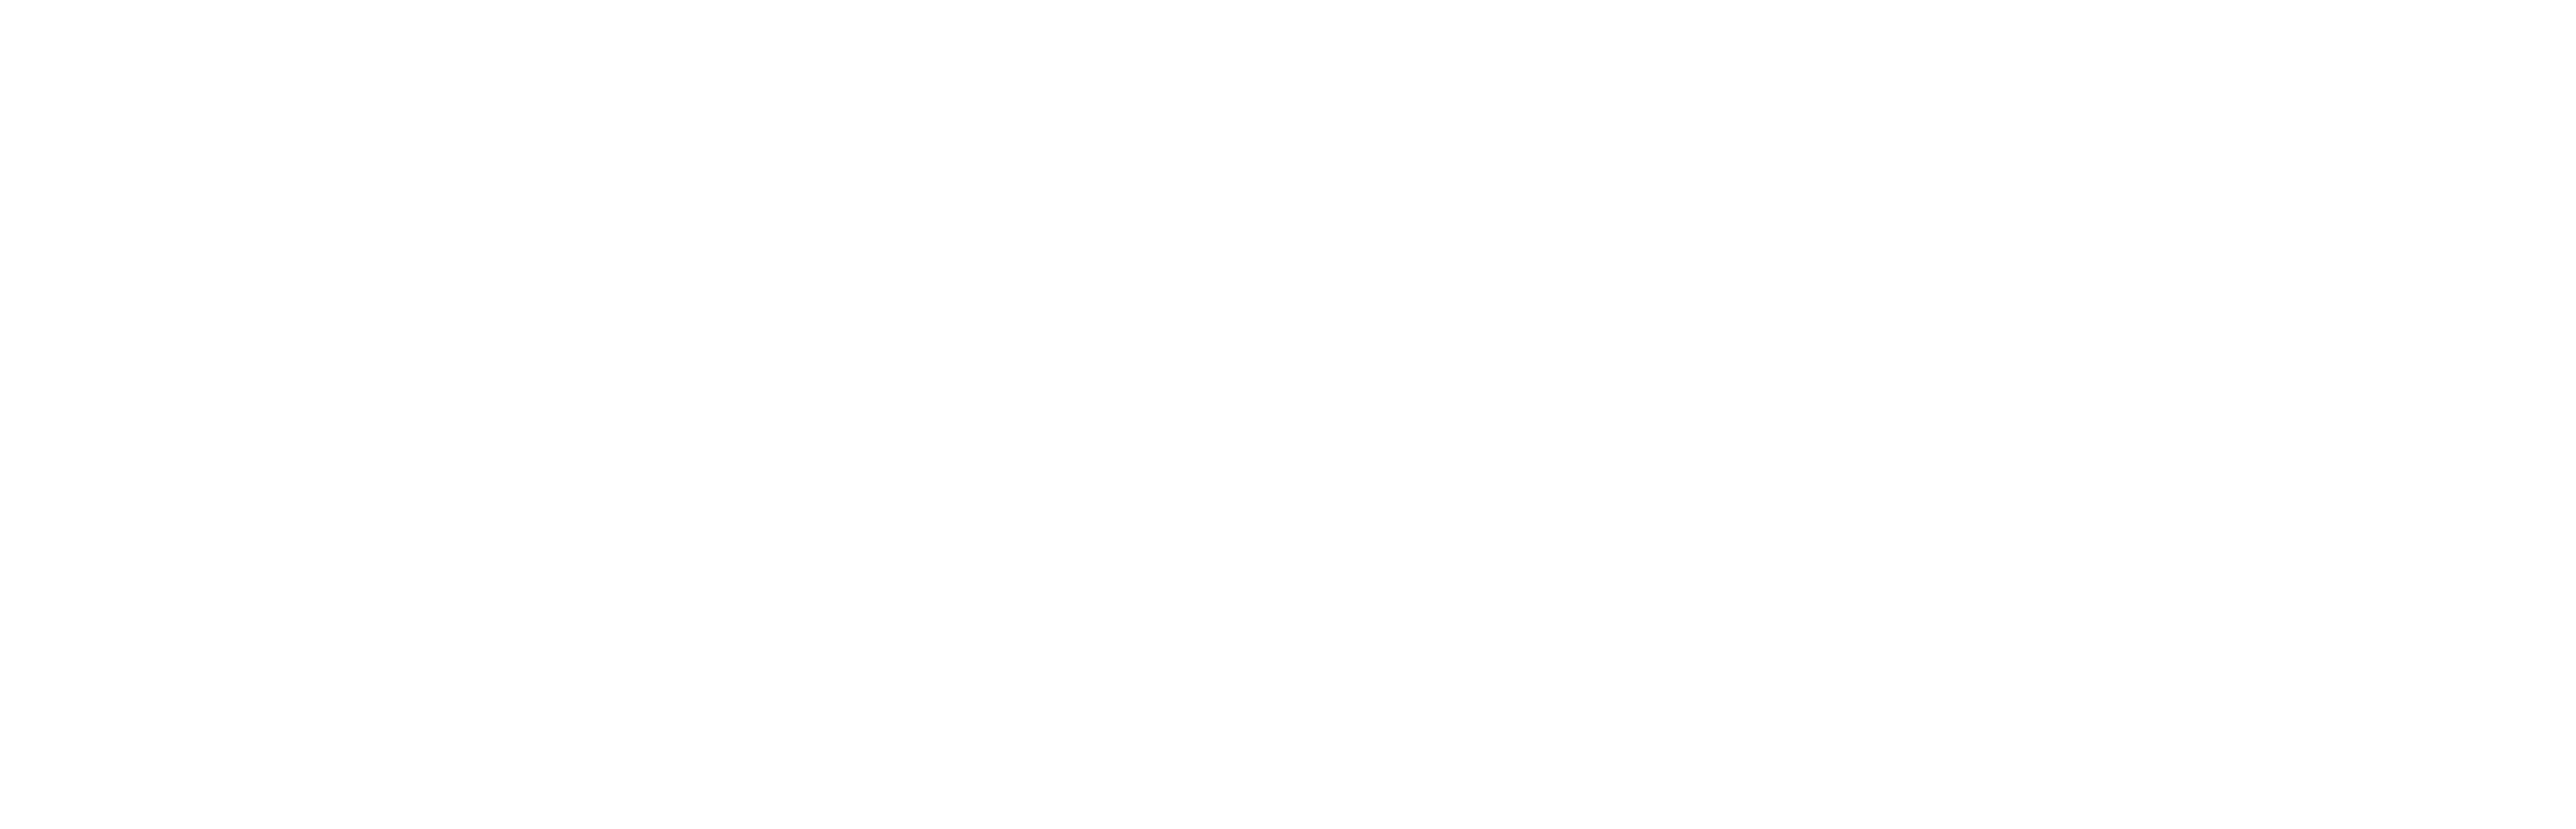 Chargify-logo